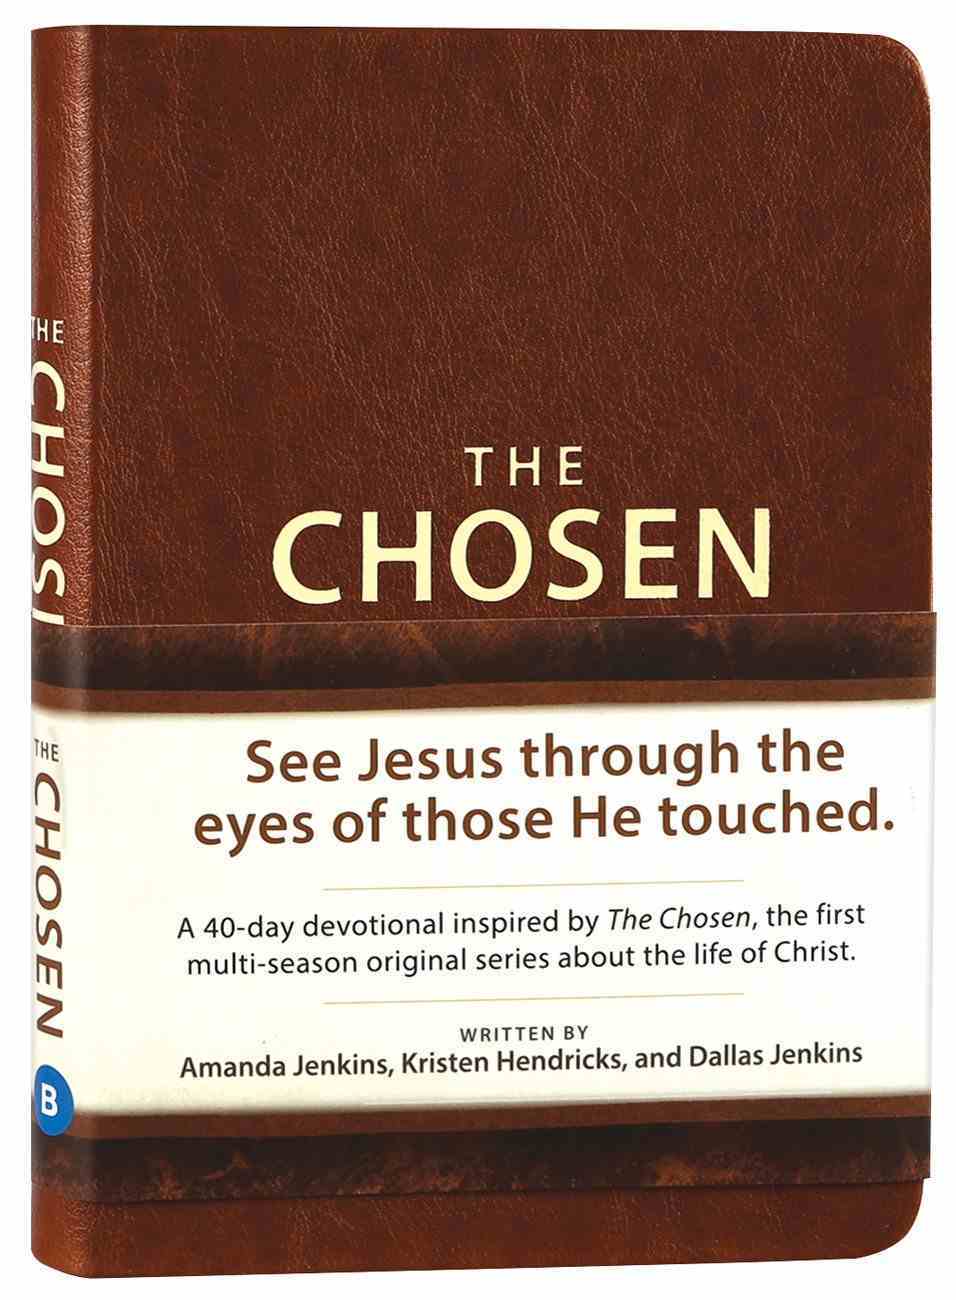 The Chosen : 40 Days With Jesus (Book 1) (The Chosen Series) Imitation Leather